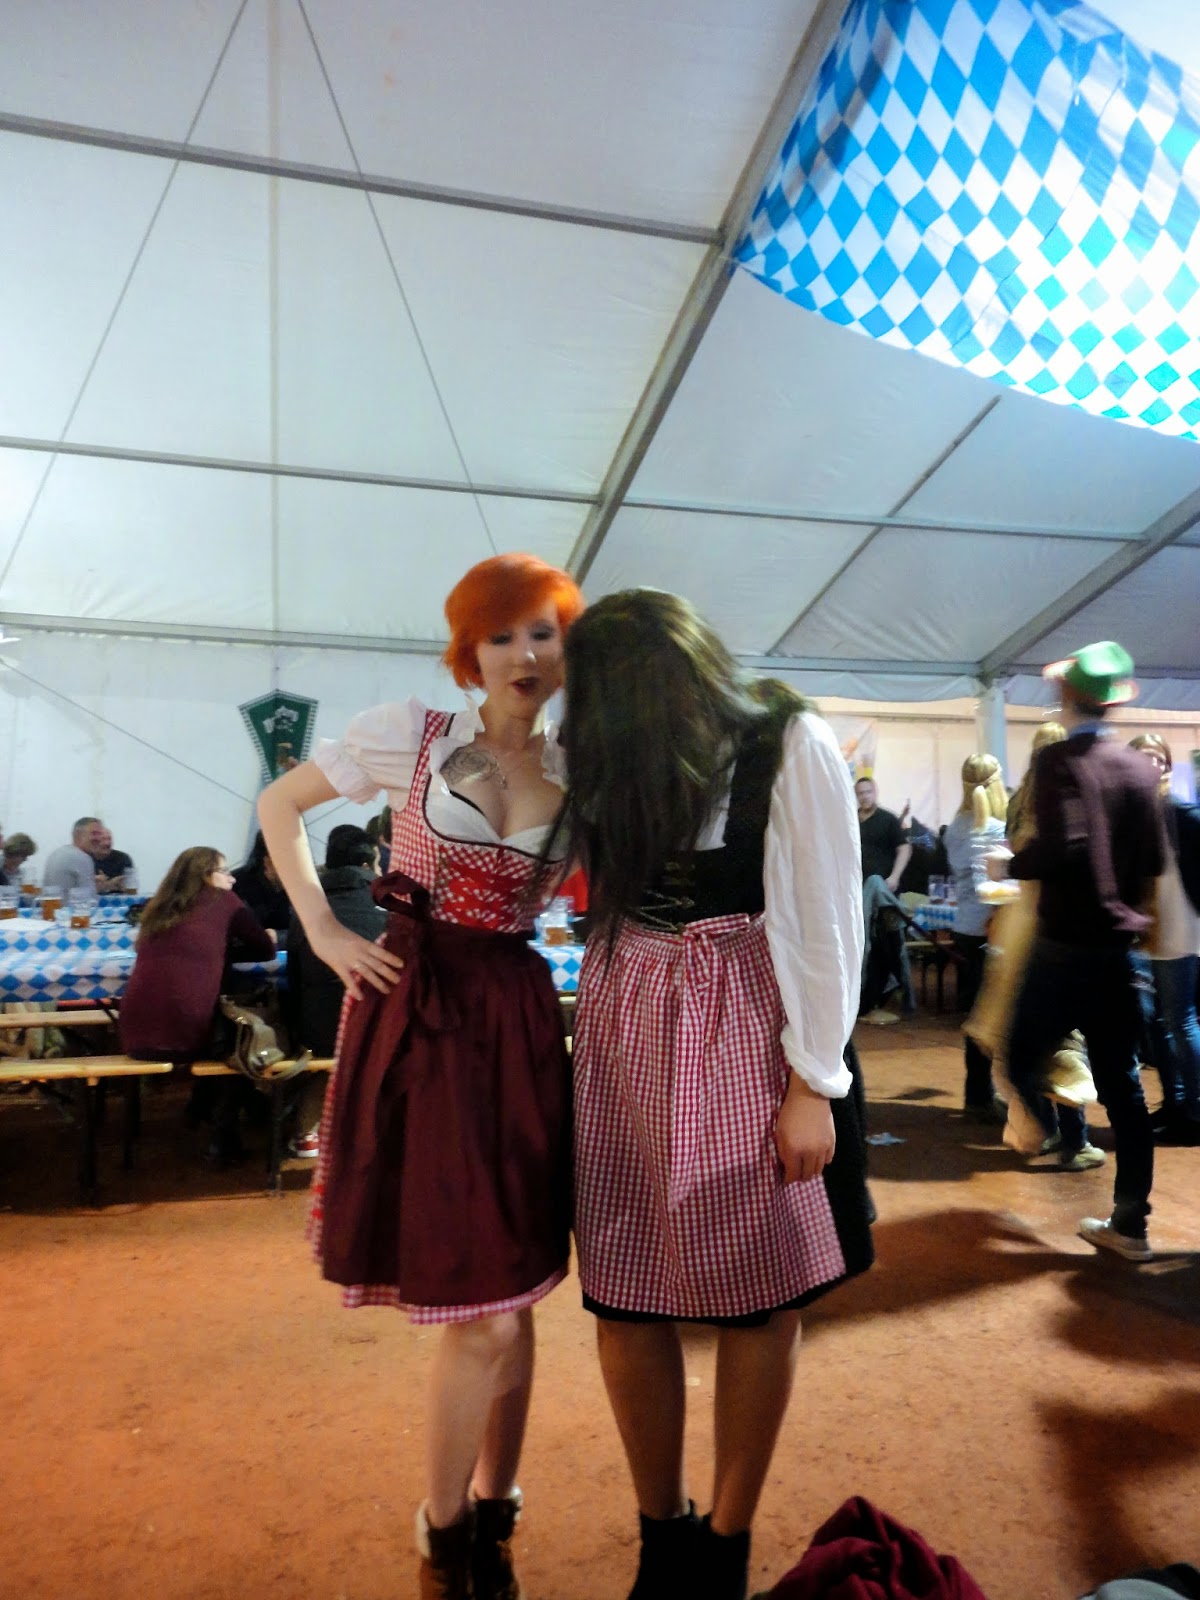 german dirndls traditional dress at edinburgh oktoberfest